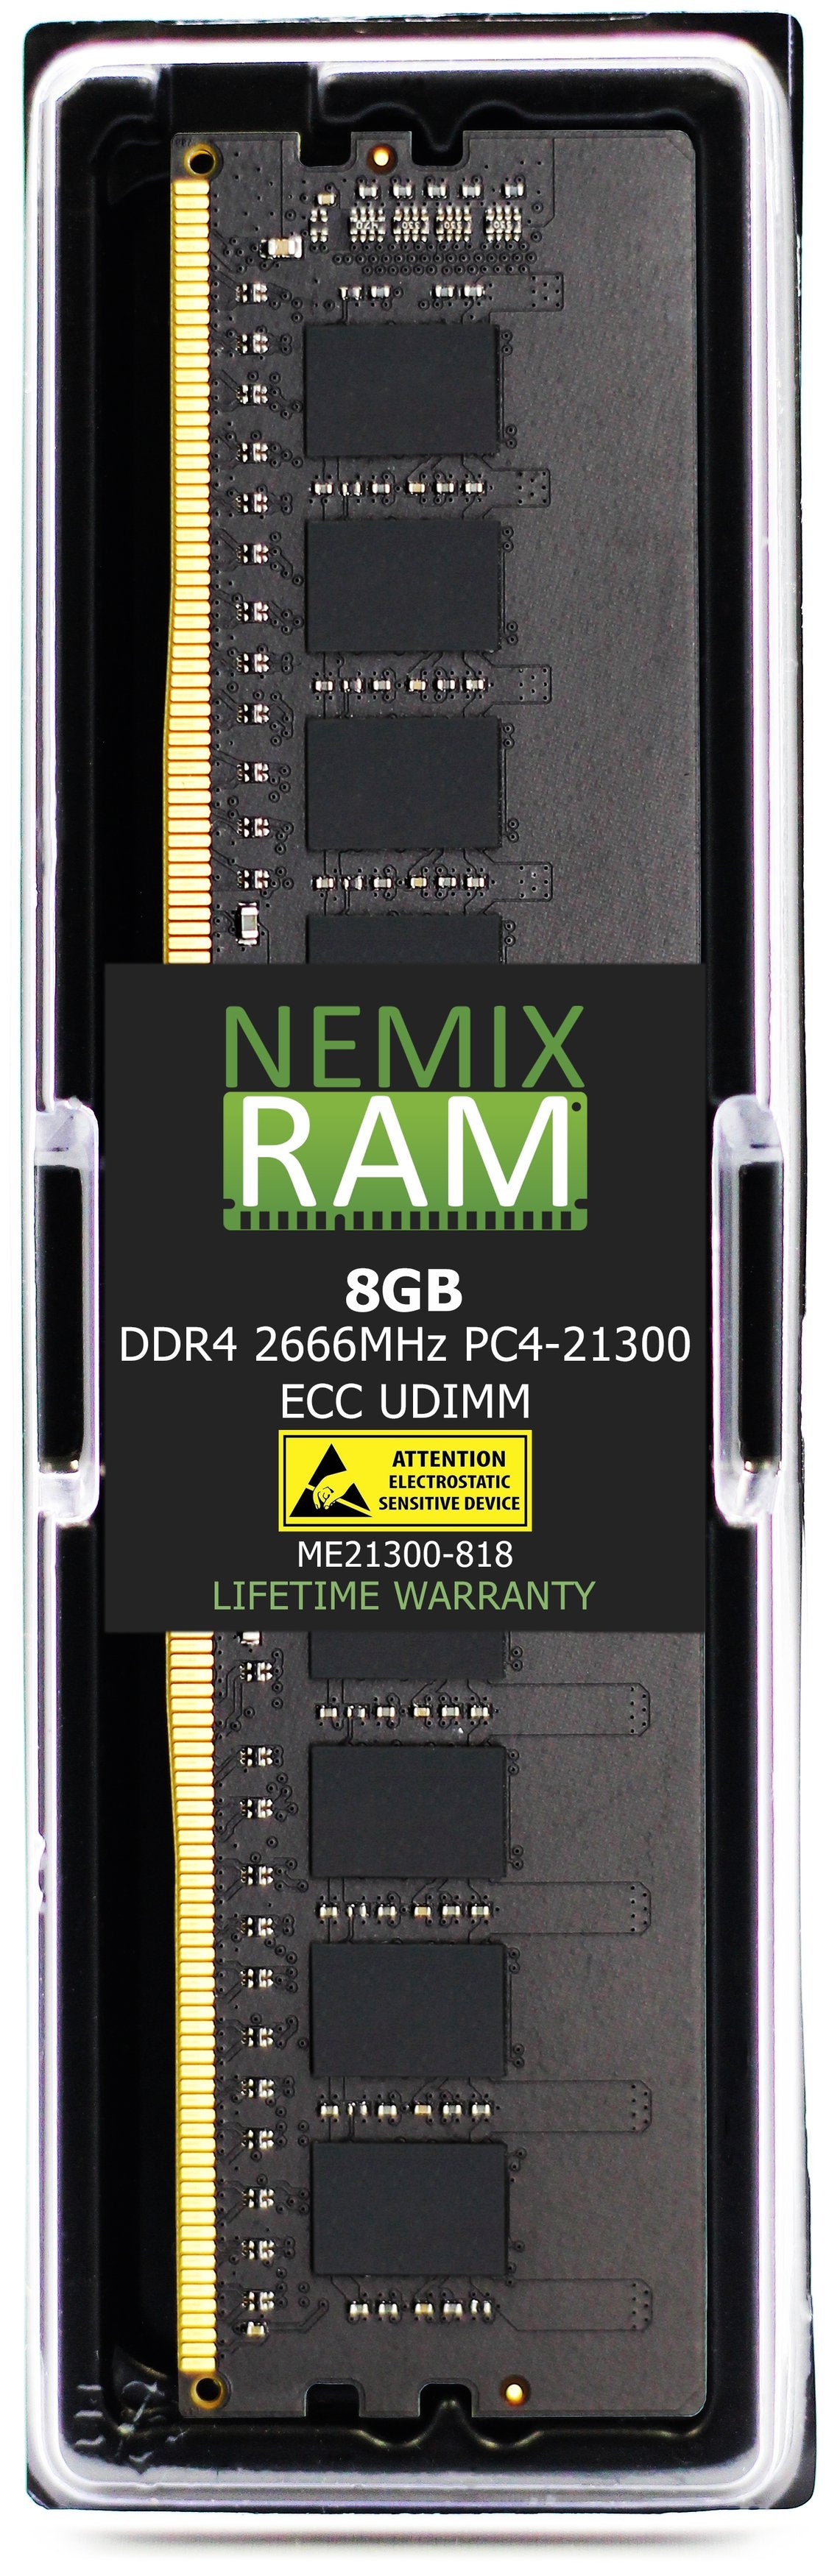 8GB DDR4 2666MHZ PC4-21300 ECC UDIMM Compatible with Supermicro MEM-DR480LB-EU26